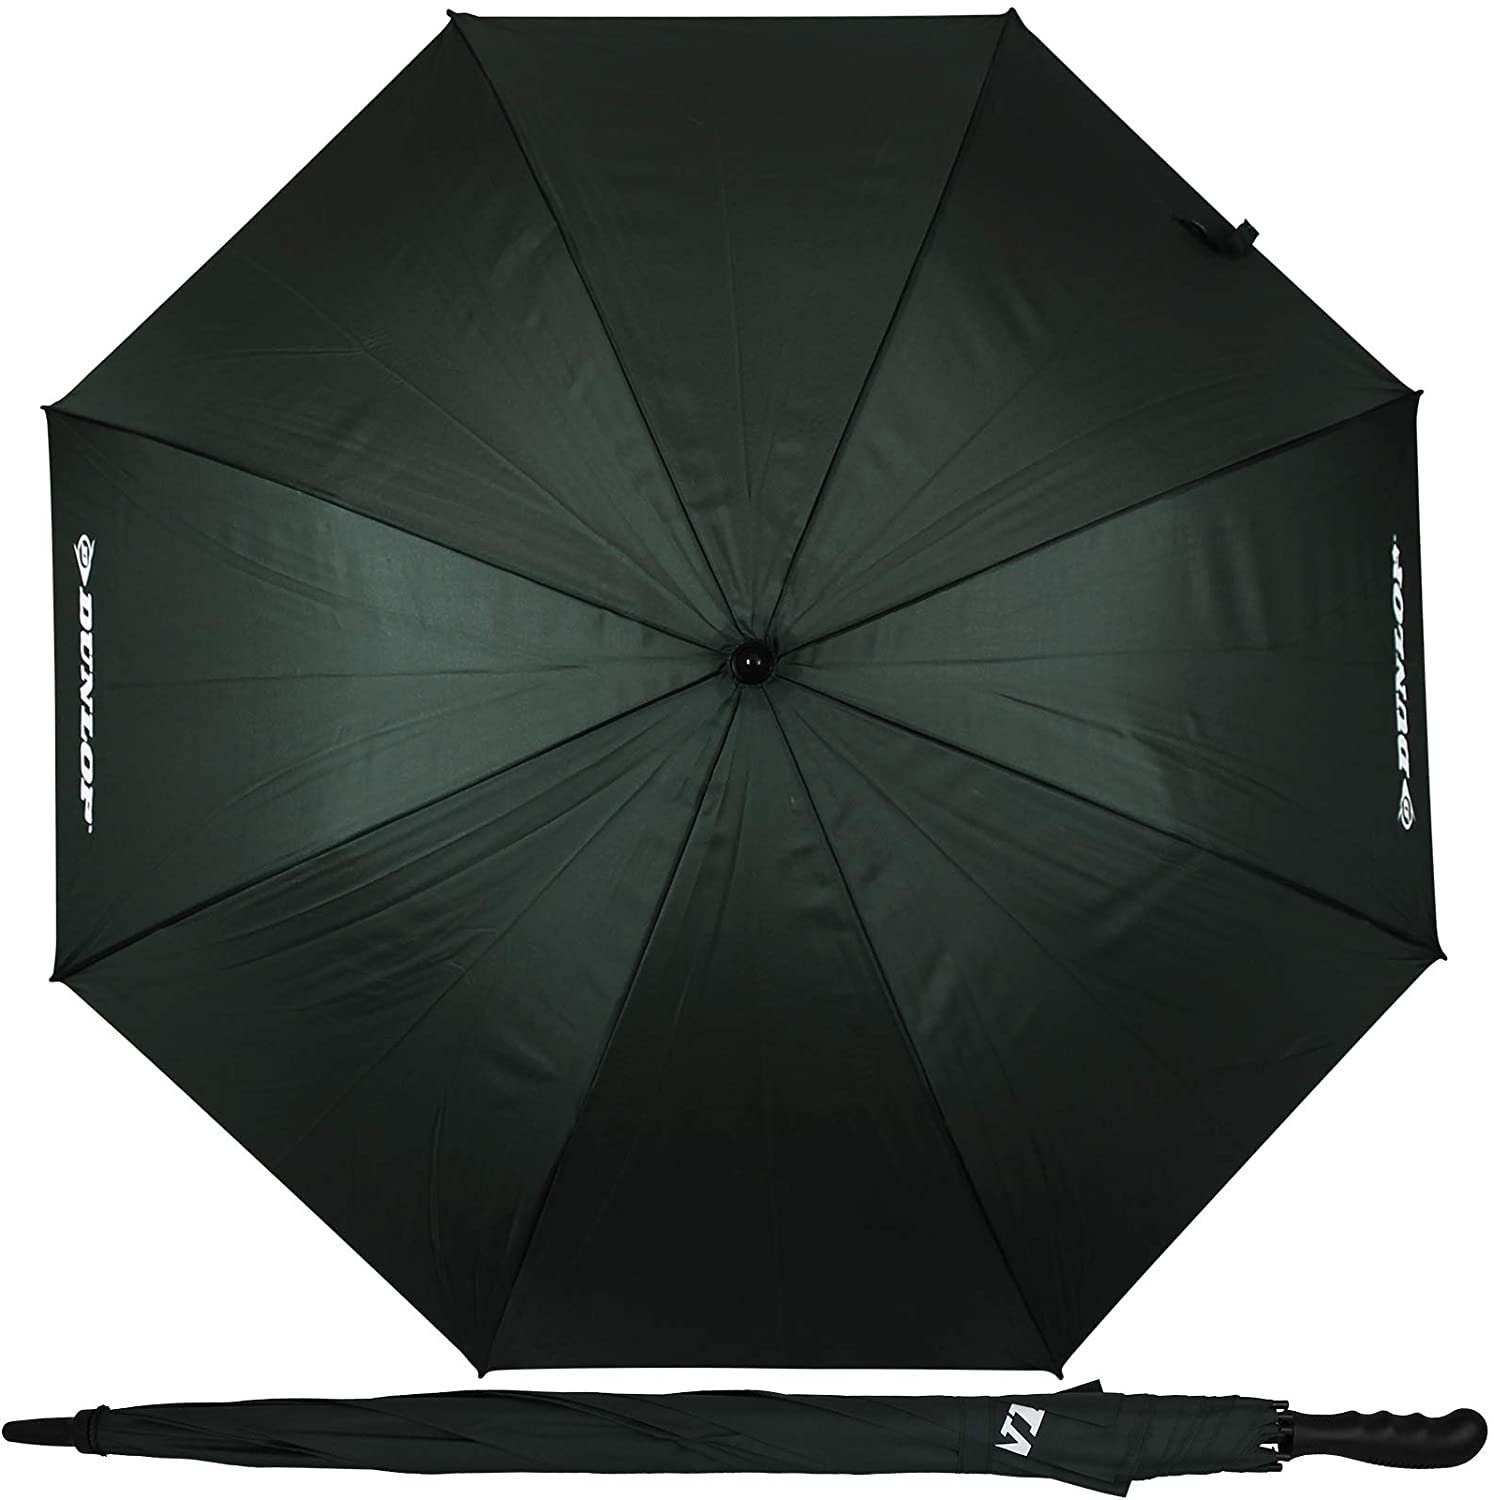 Dokado Partnerschirm XXL Paar Regenschirm Partnerschirm Personen mit Stockschirm 2 für Doppelregenschirm Dunlop Familienschirm grau 130cm Farbwahl